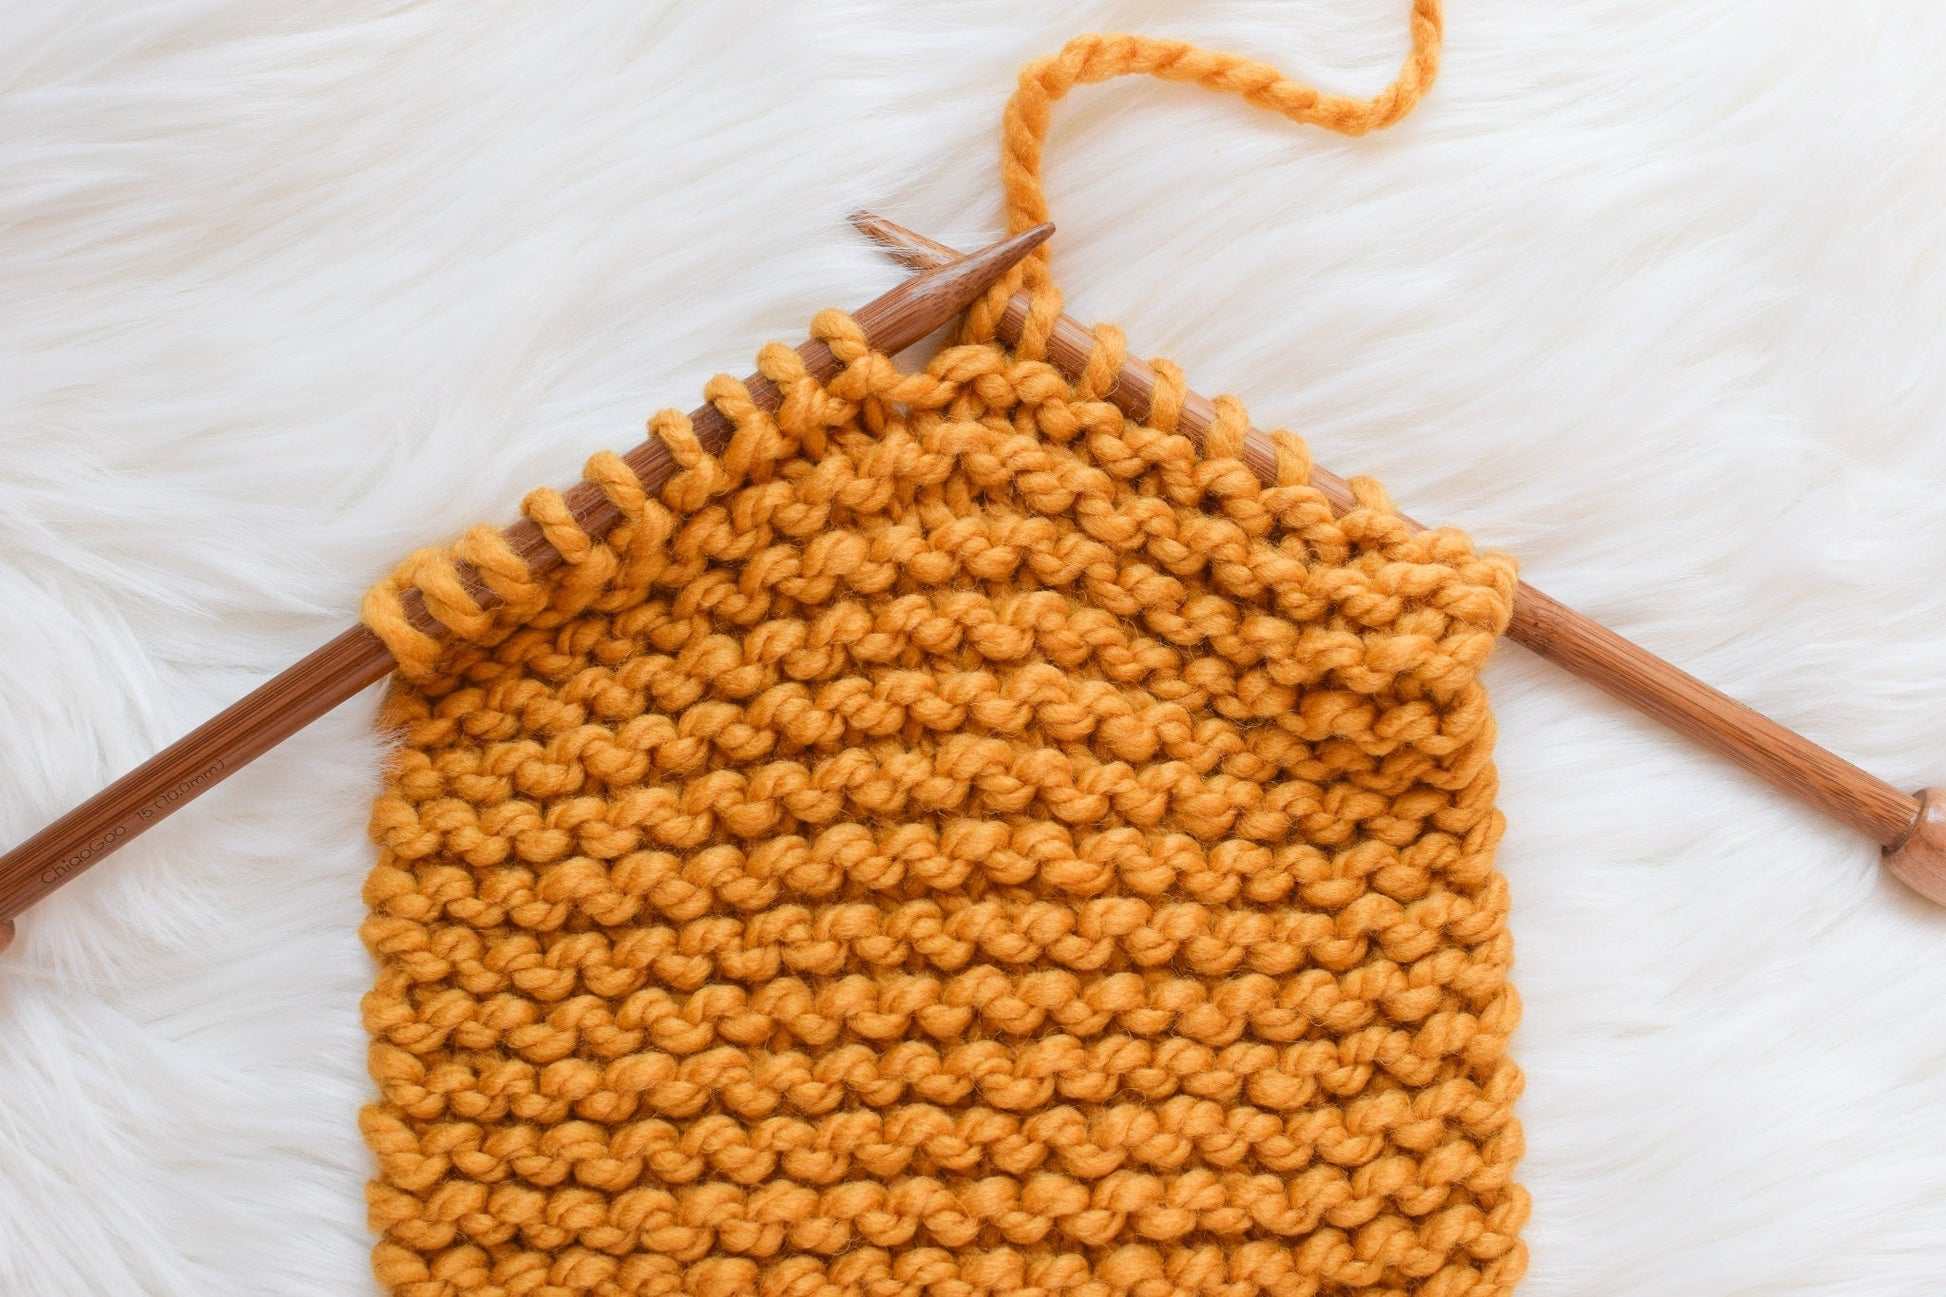 Scarf Knitting Kit Knifty Knittings